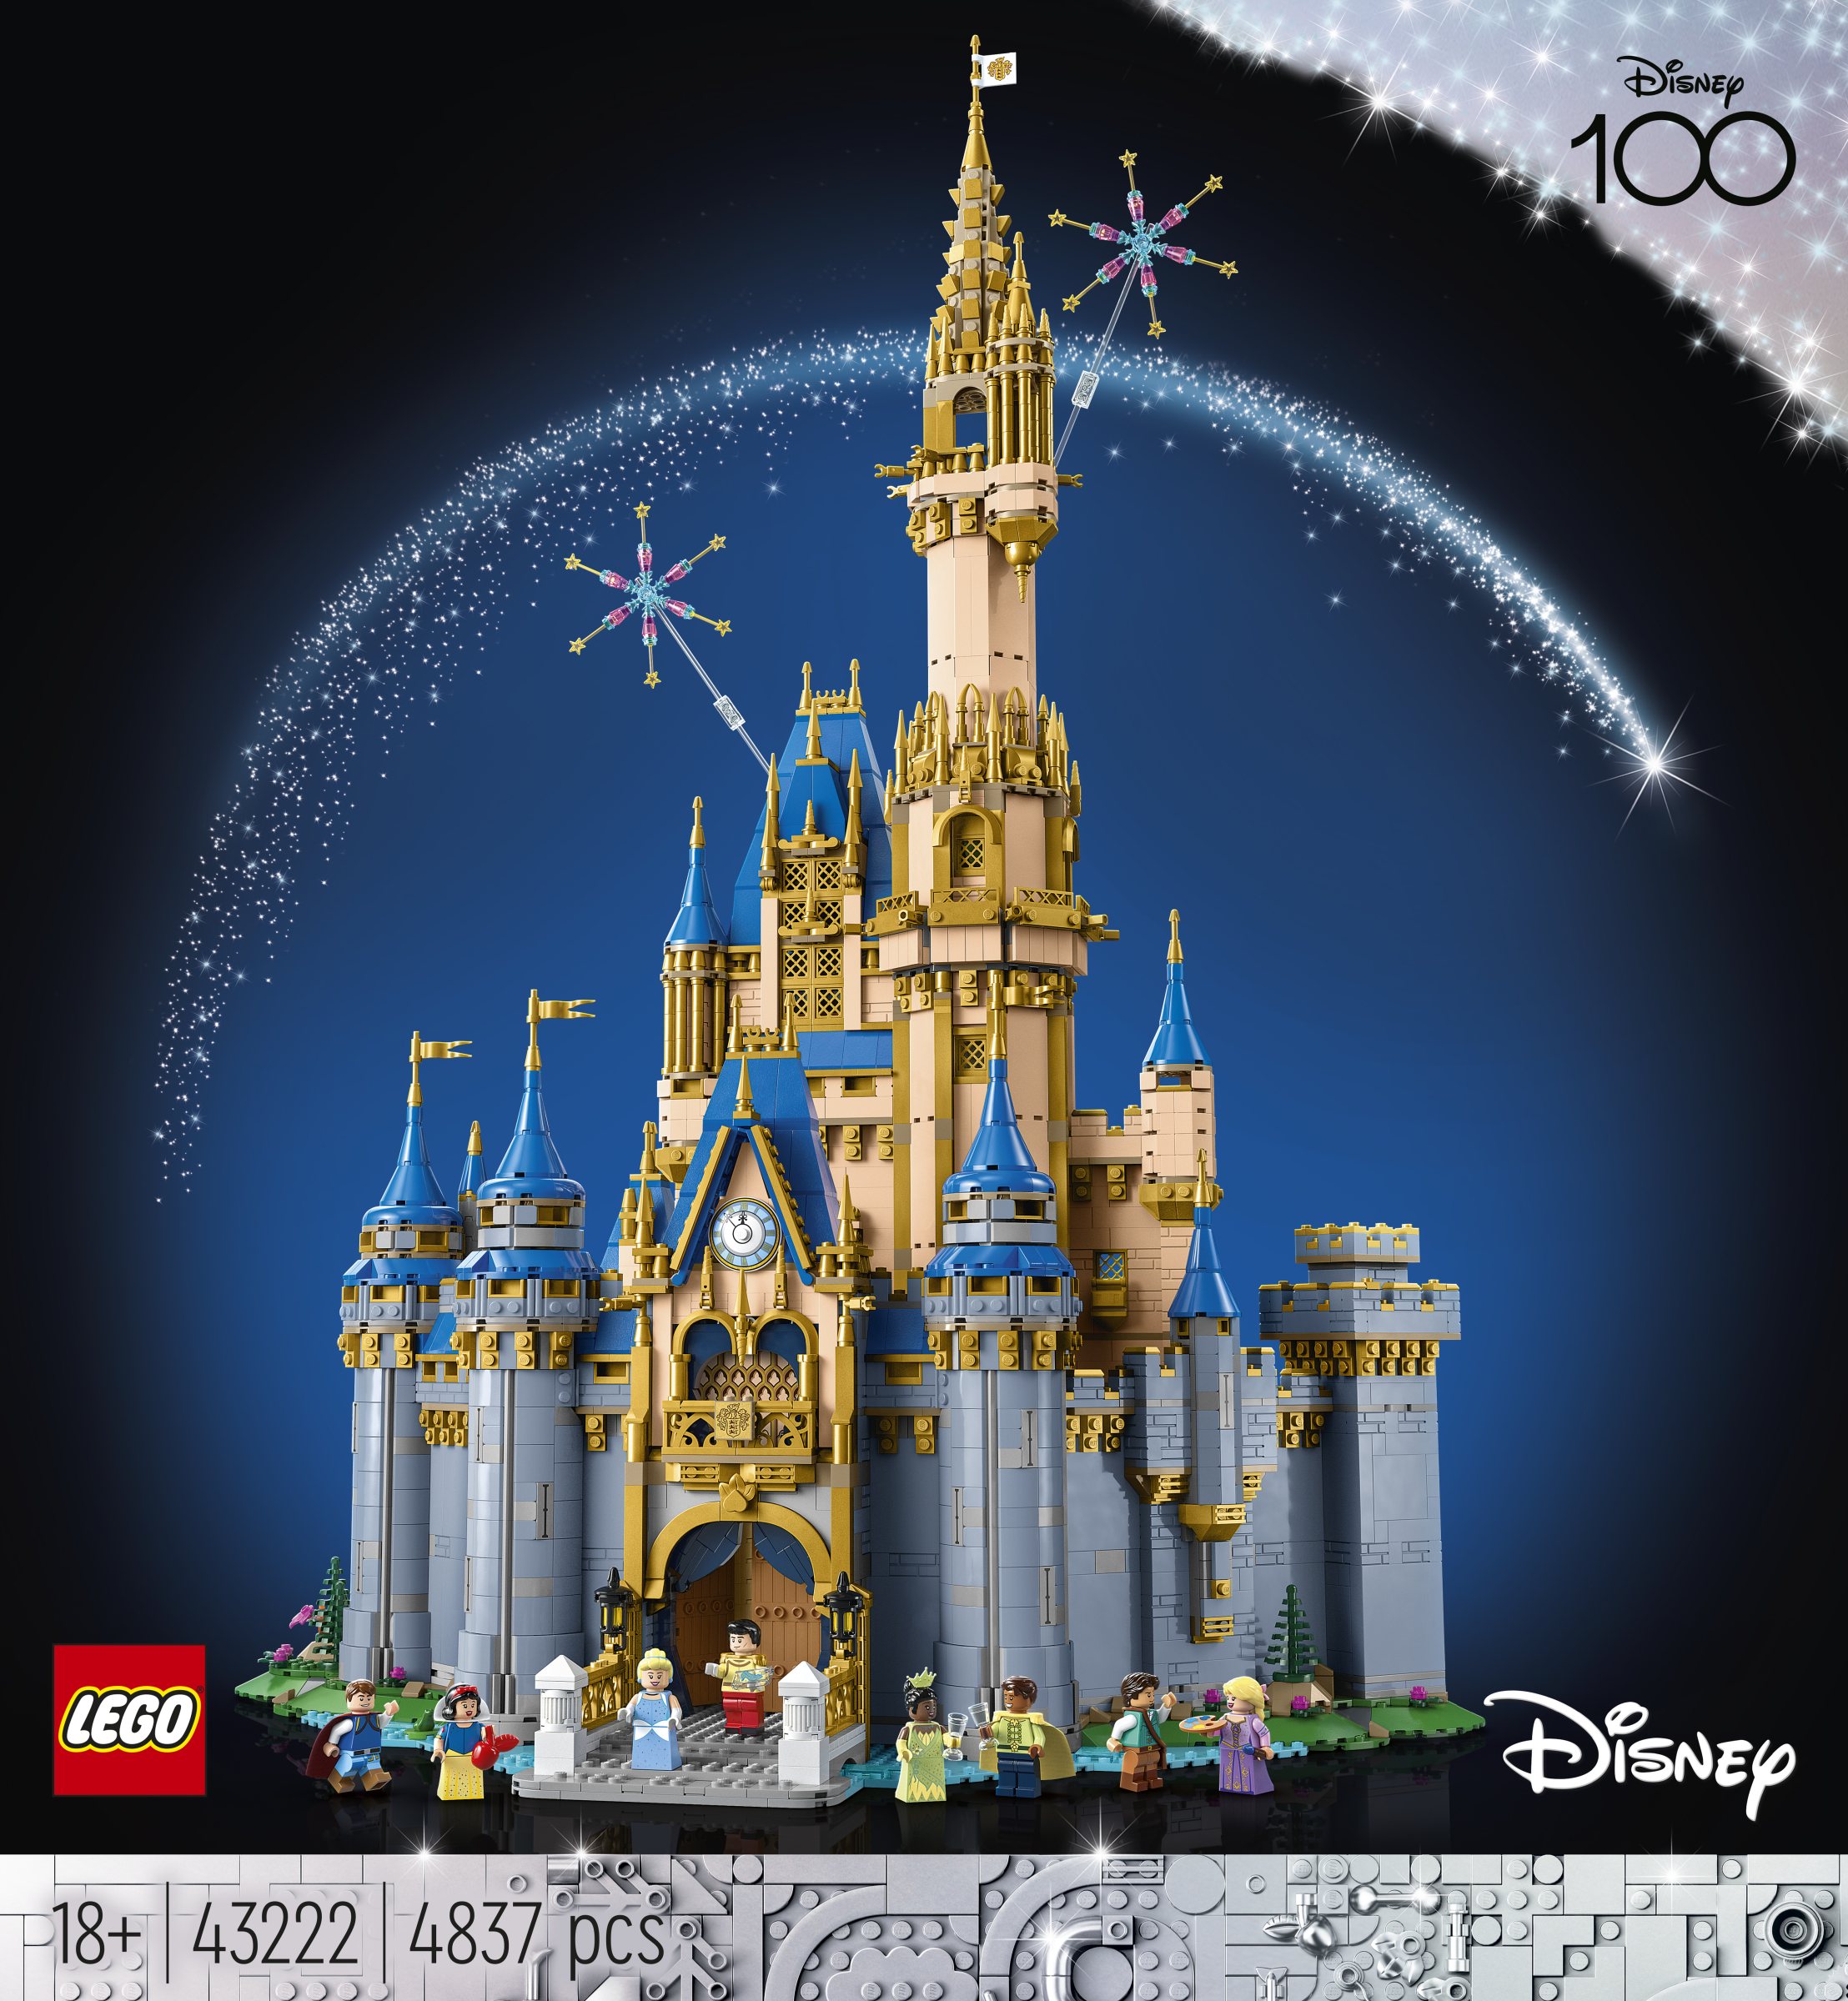 Lego Disney Castle 71040 NEW - Unique Minnie & Mickey minifigures - Retired